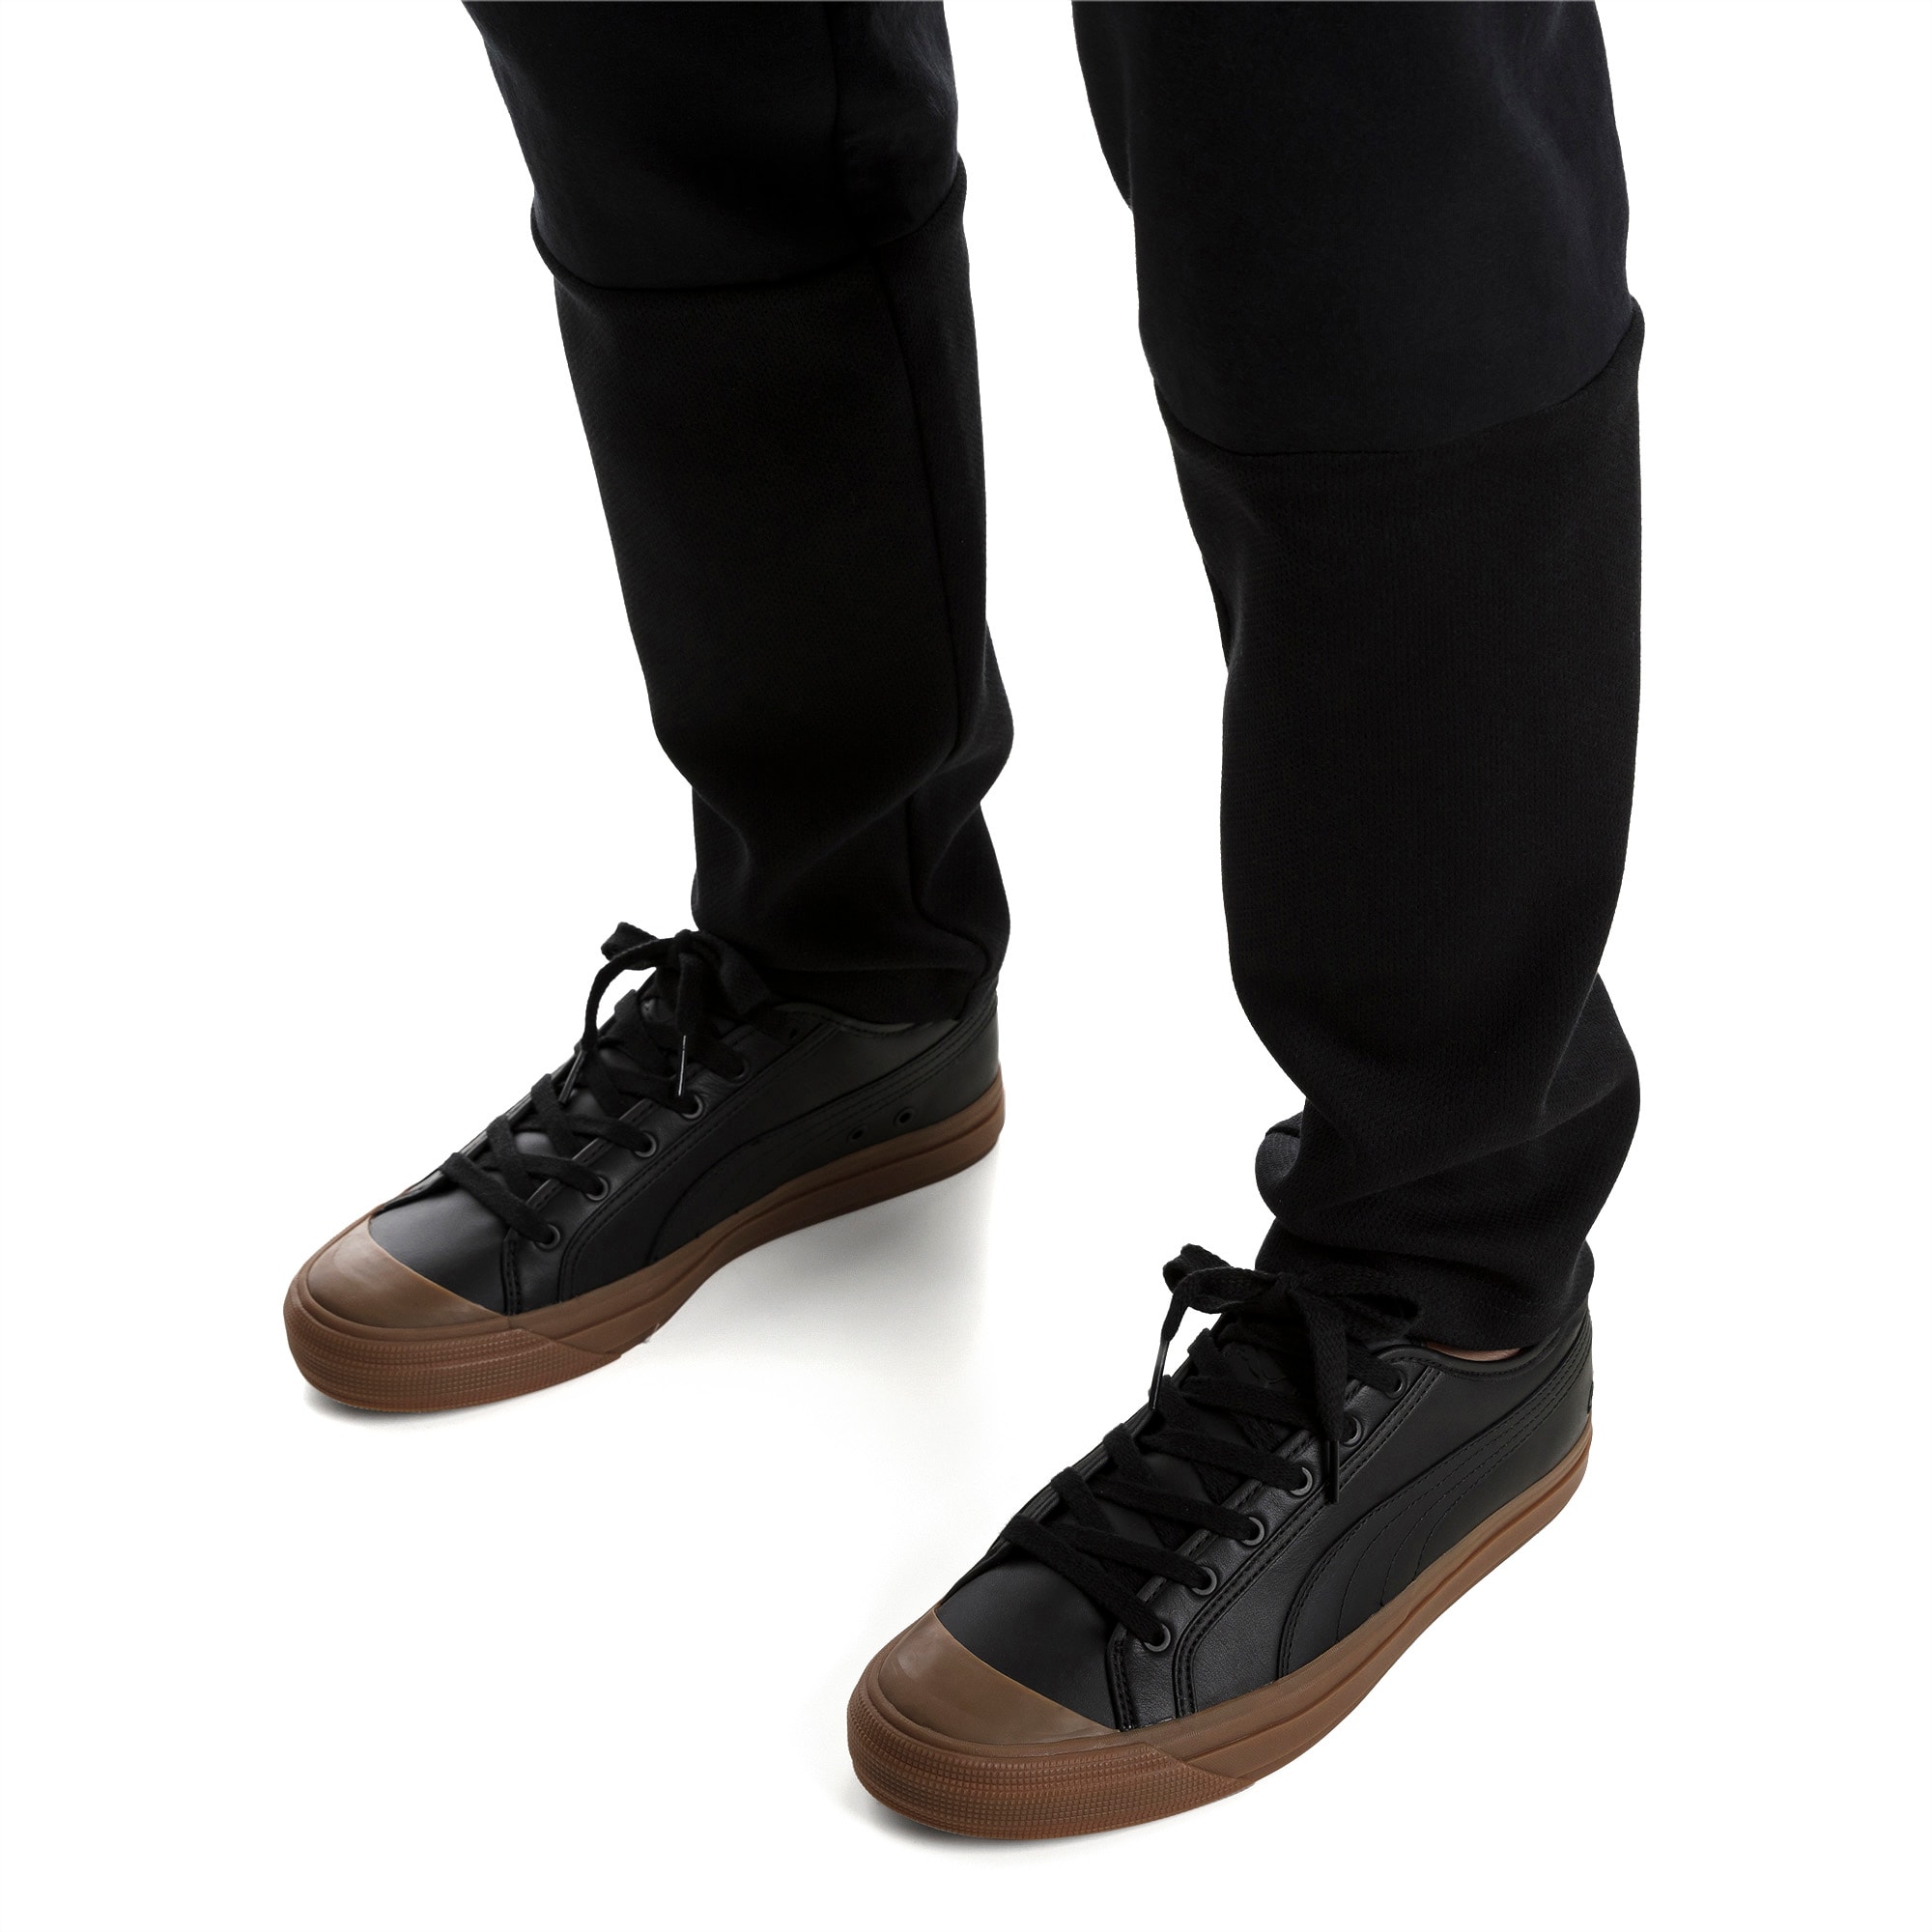 puma capri leather sneakers